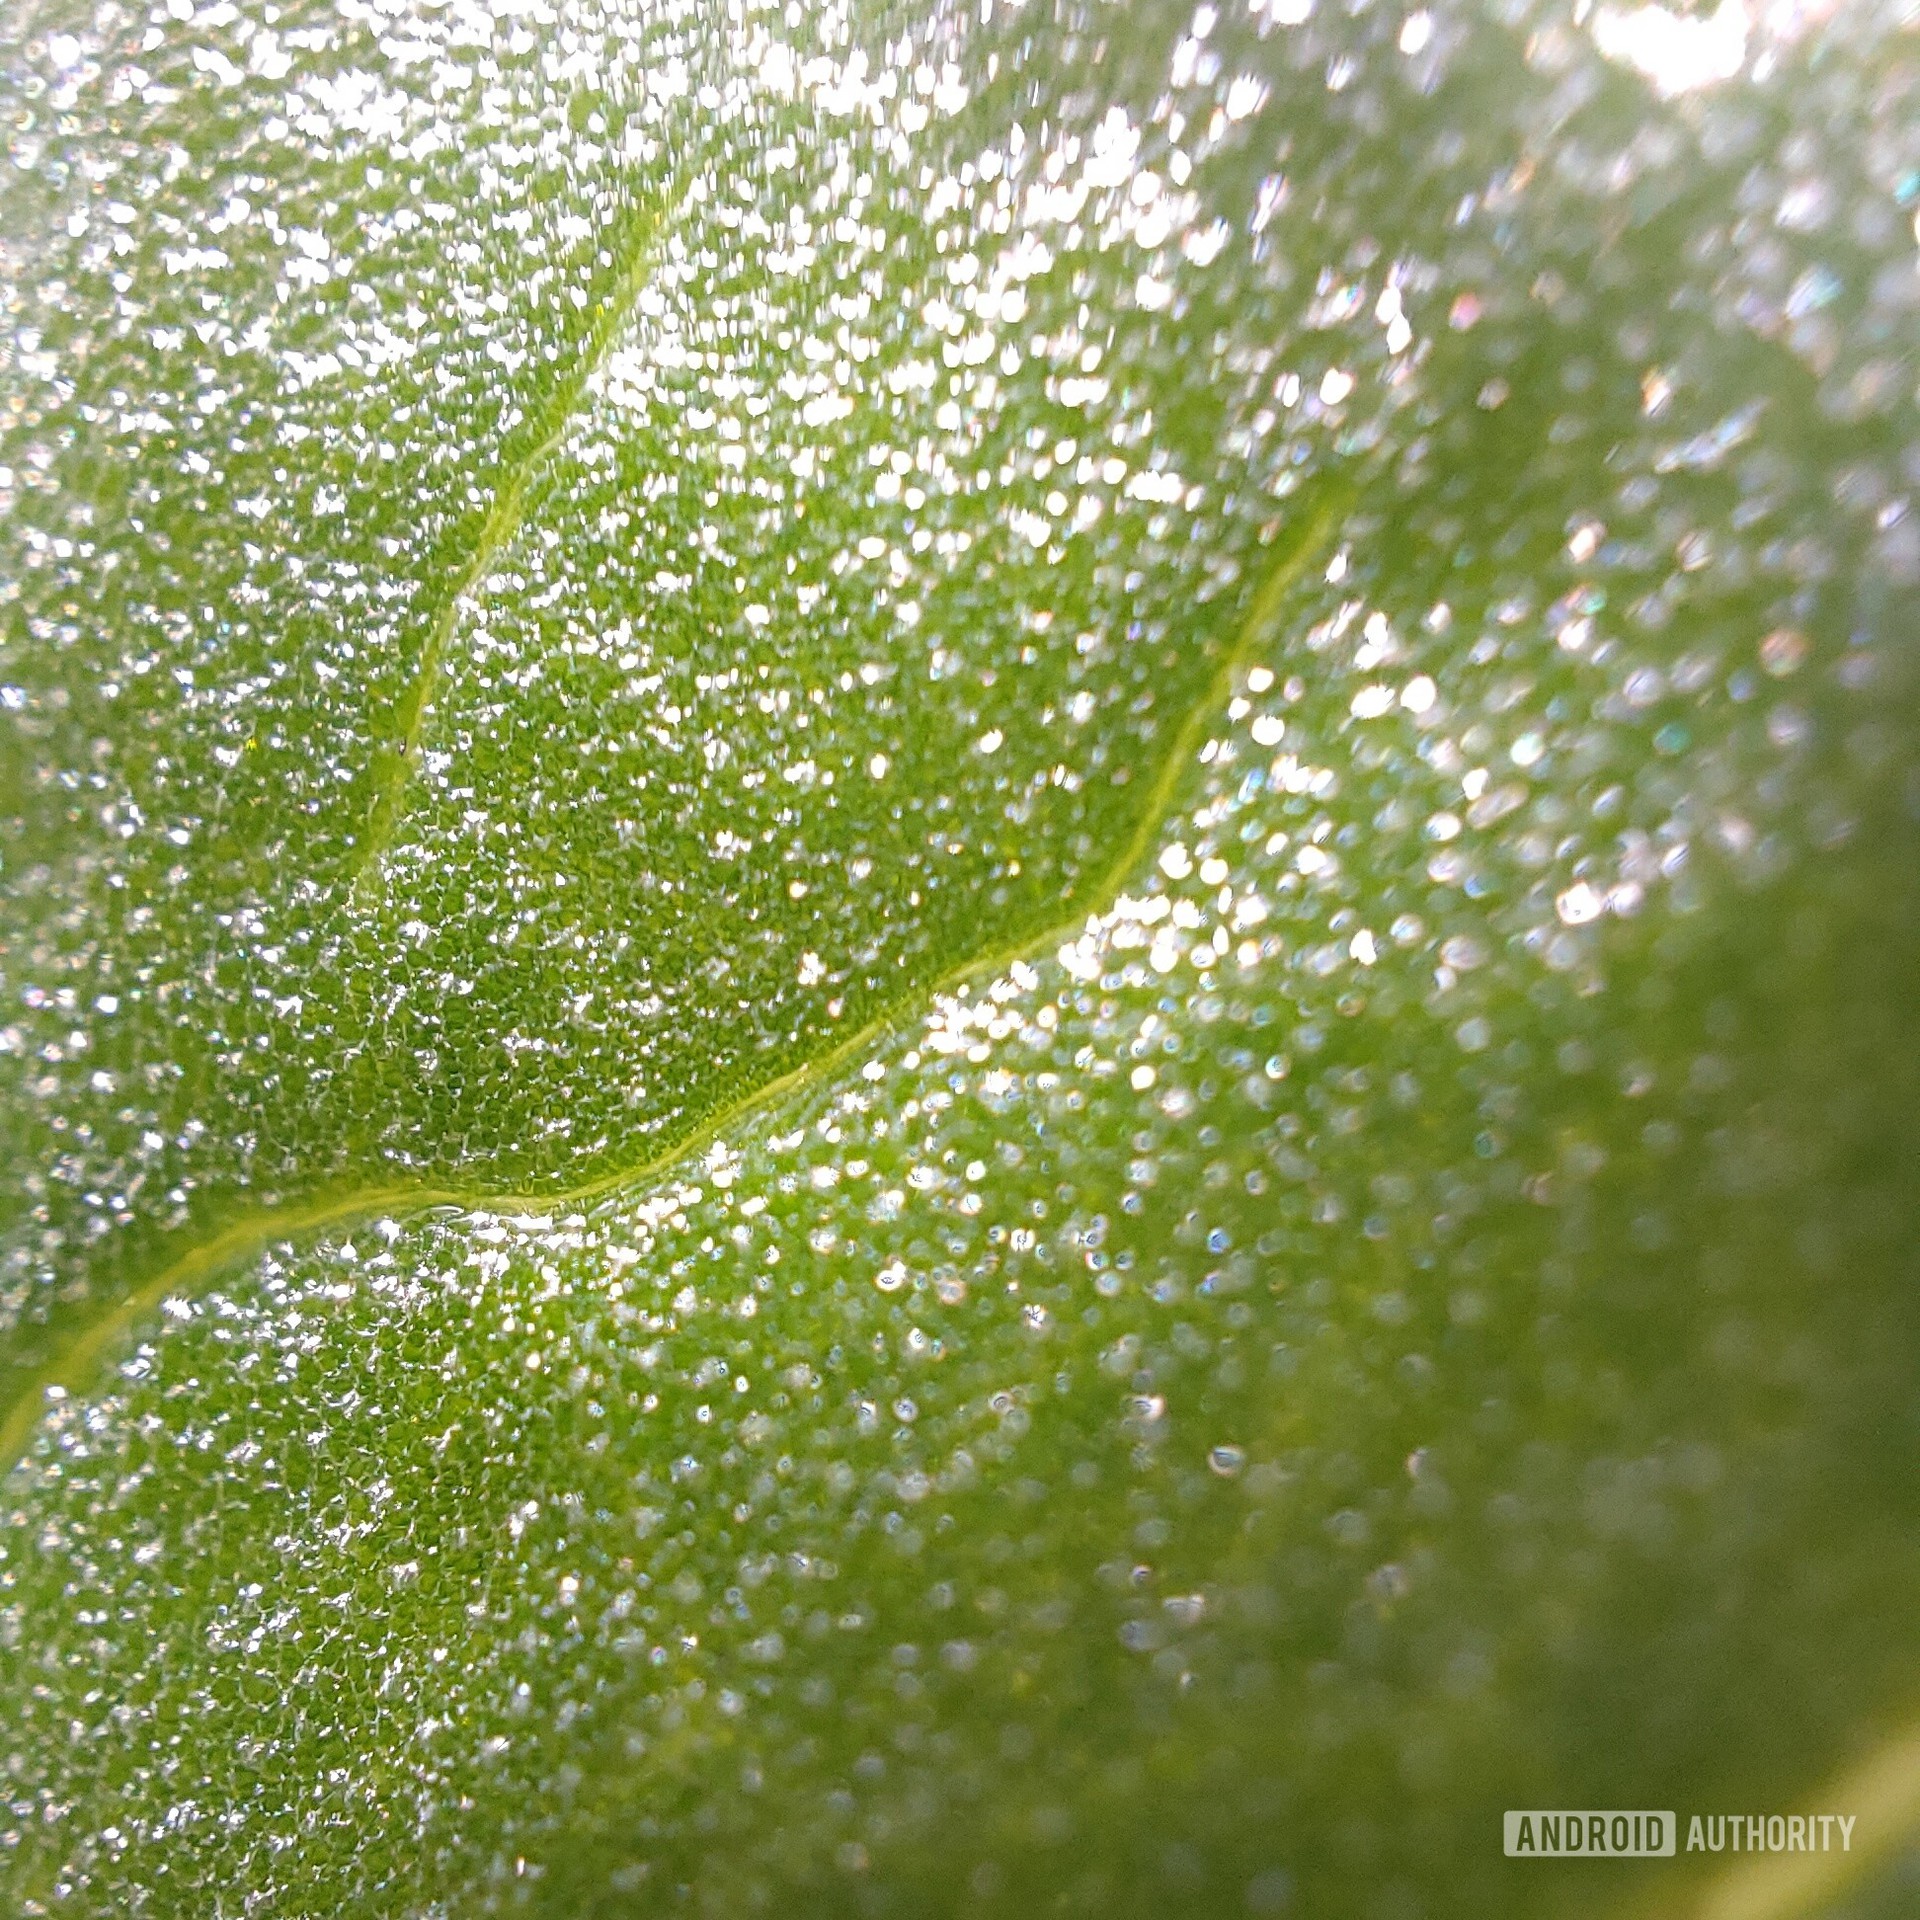 A close-up shot of a leaf.